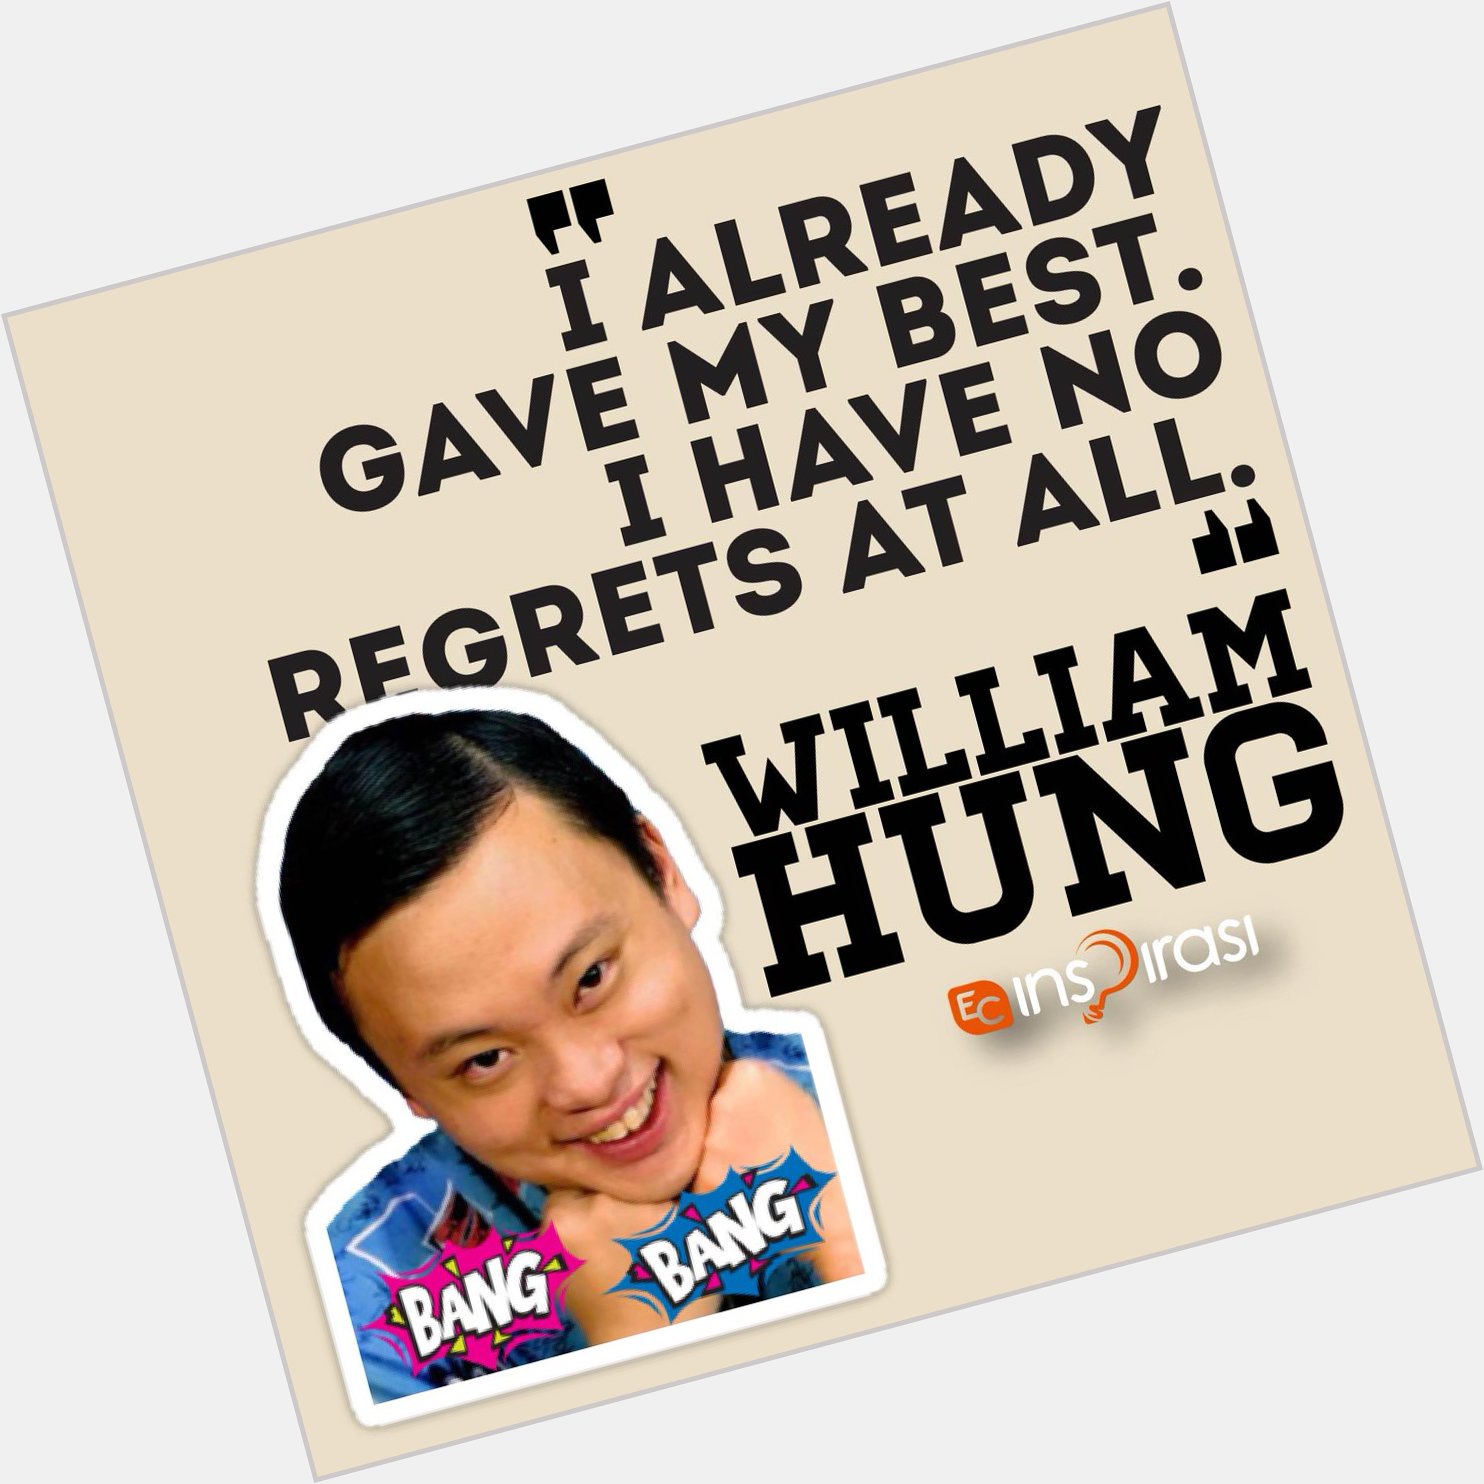 Hari ini birthday William Hung. Yang pernah famous sebab sesi ujibakat dia dalam American Idol tu.

Happy Birthday!! 